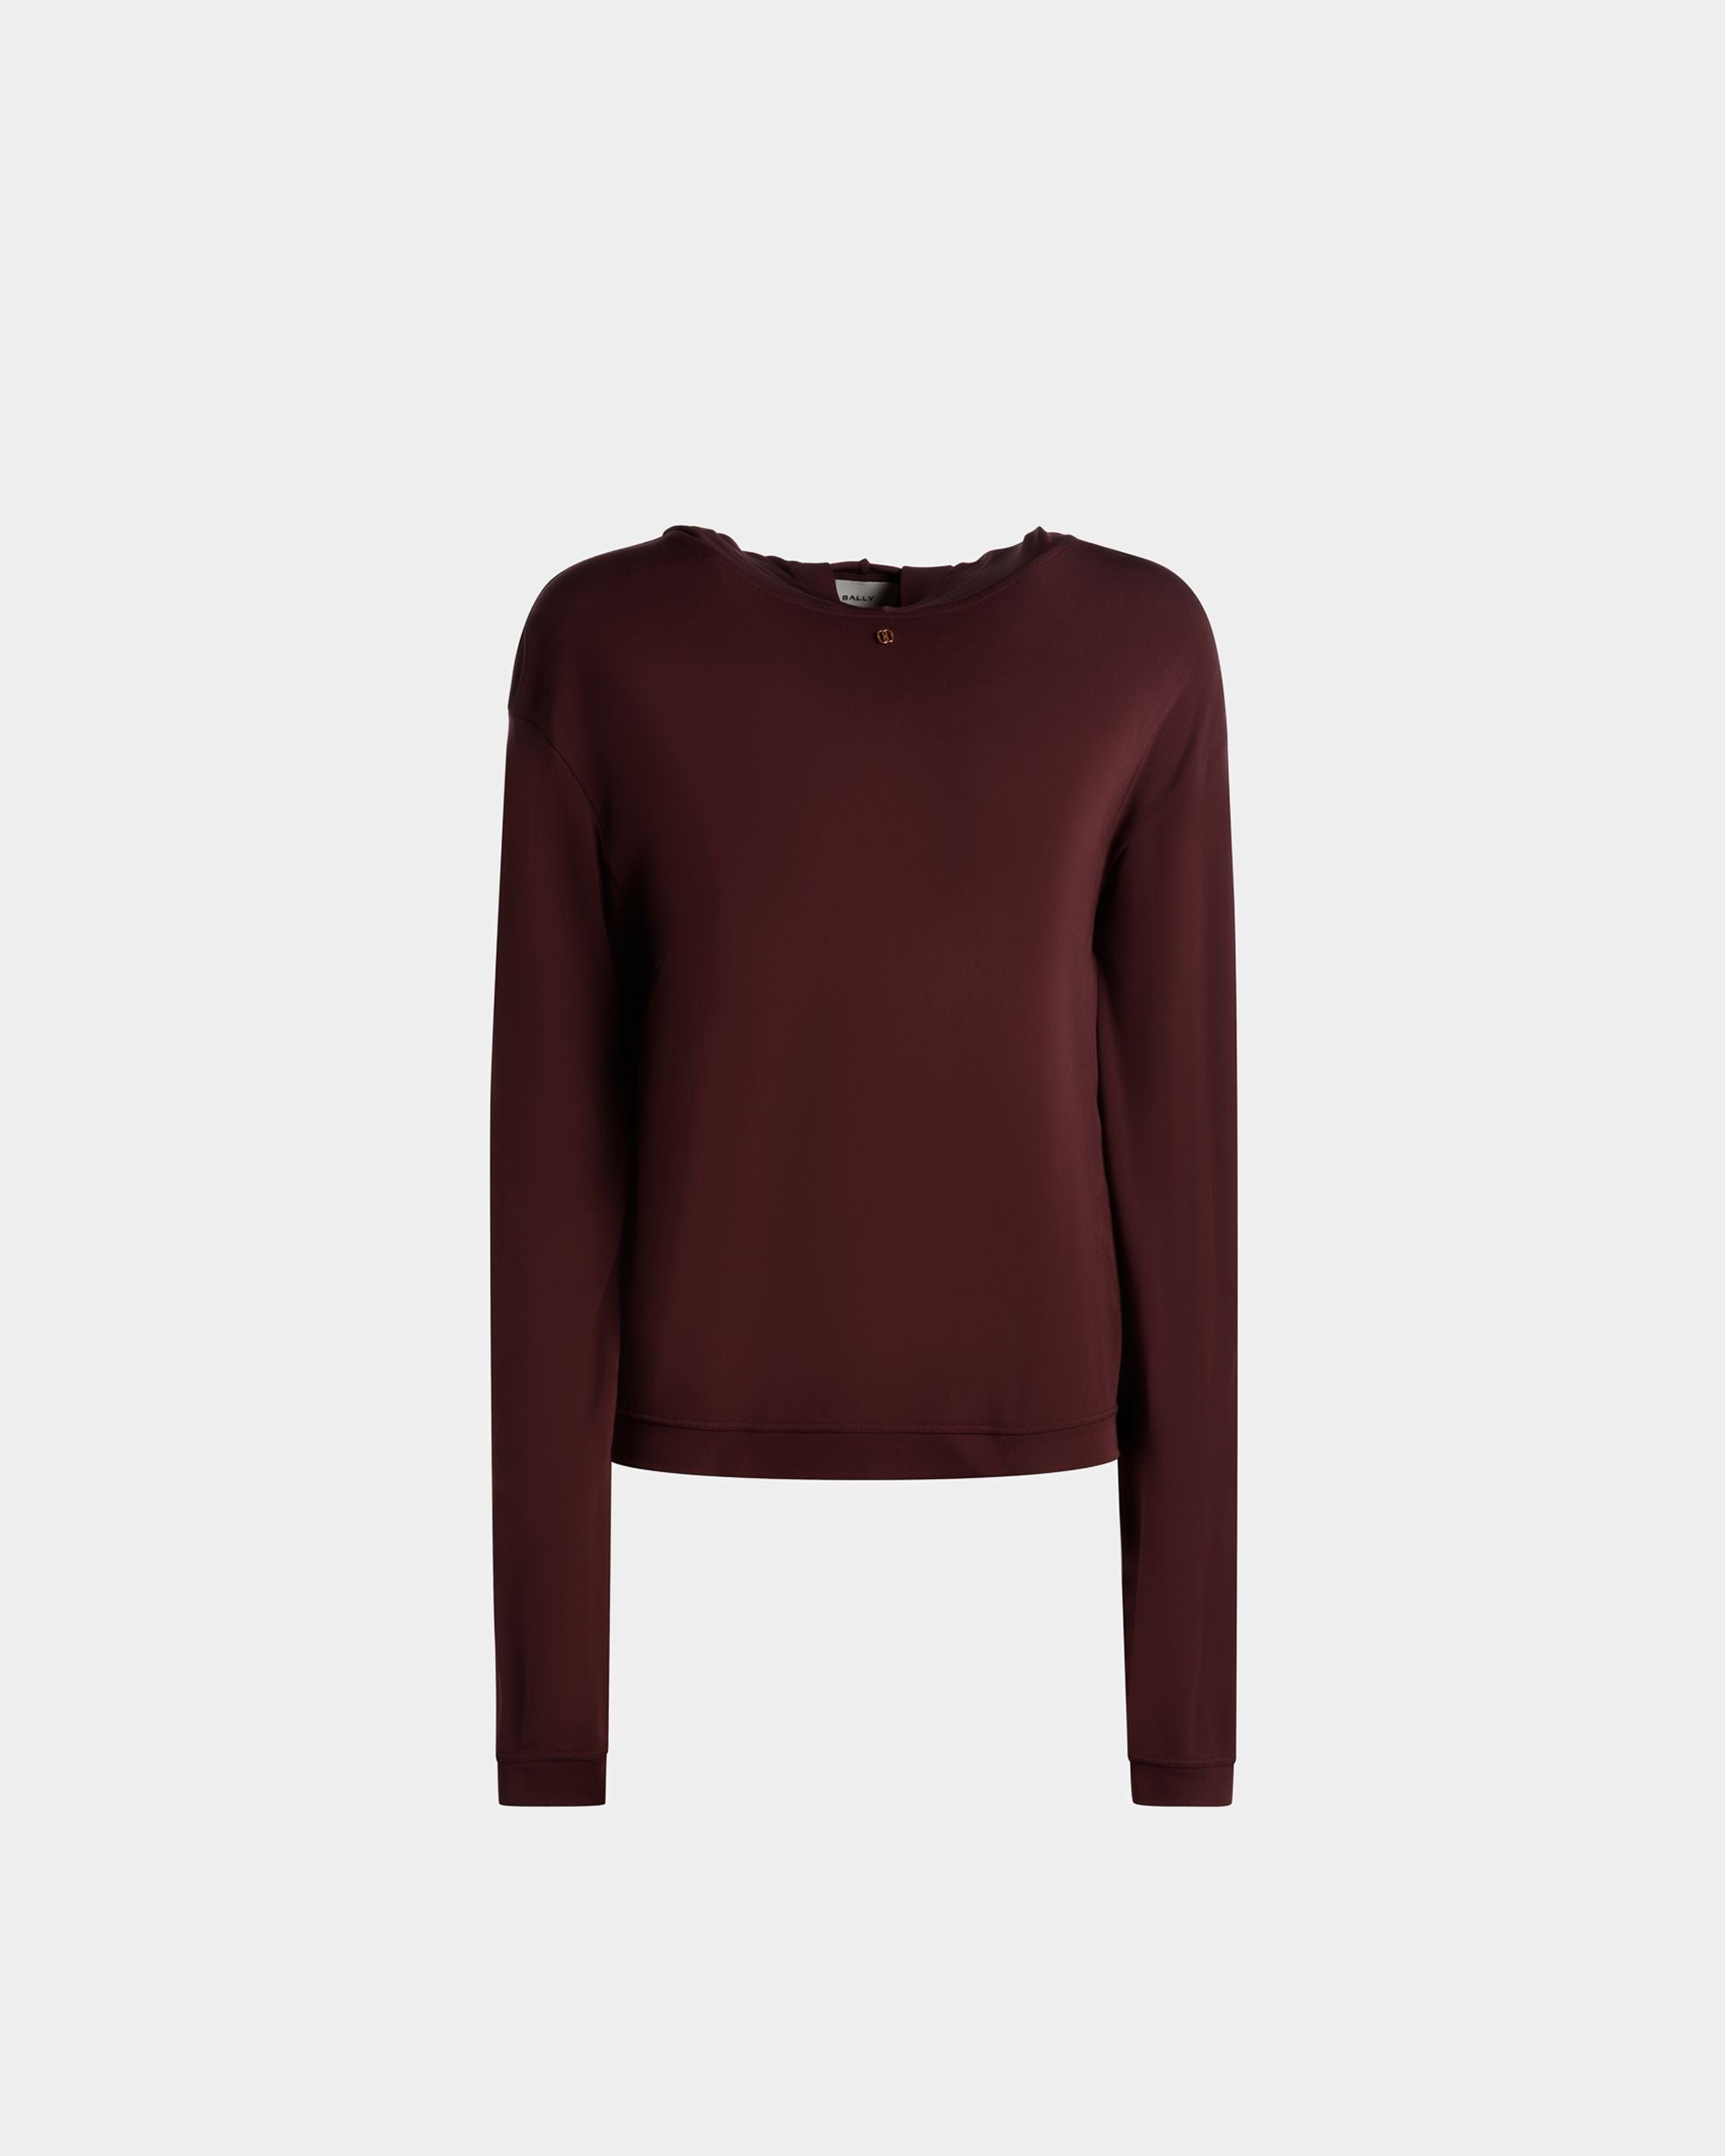 Hooded Sweatshirt | Women's Sweatshirt | Burgundy Fabric | Bally | Still Life Front